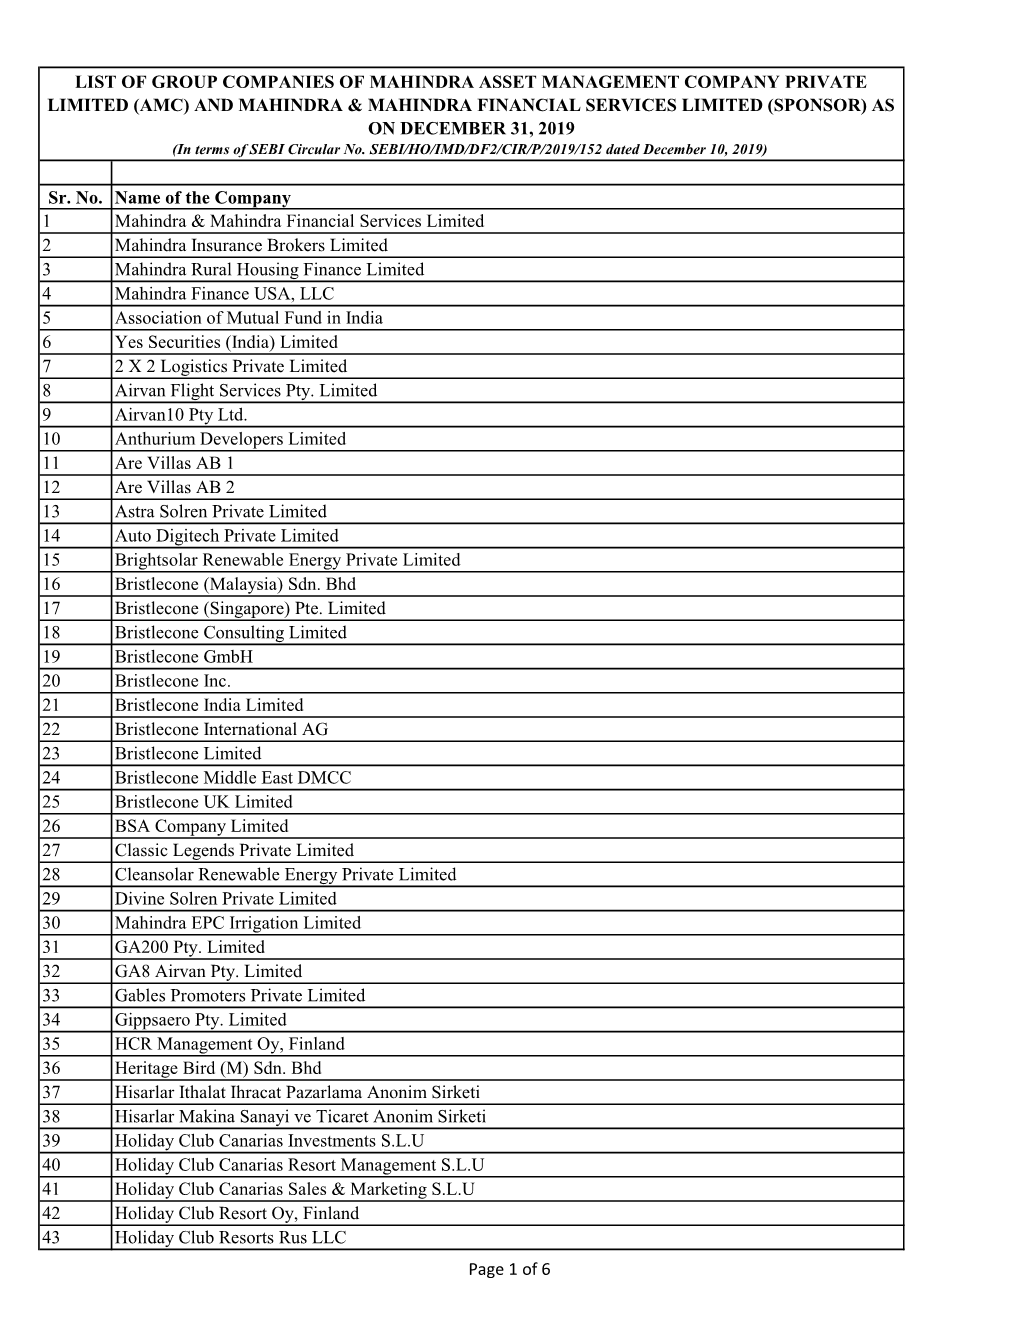 List of Group Companies of AMC and Sponsor As on Nov , 2019.Xlsx